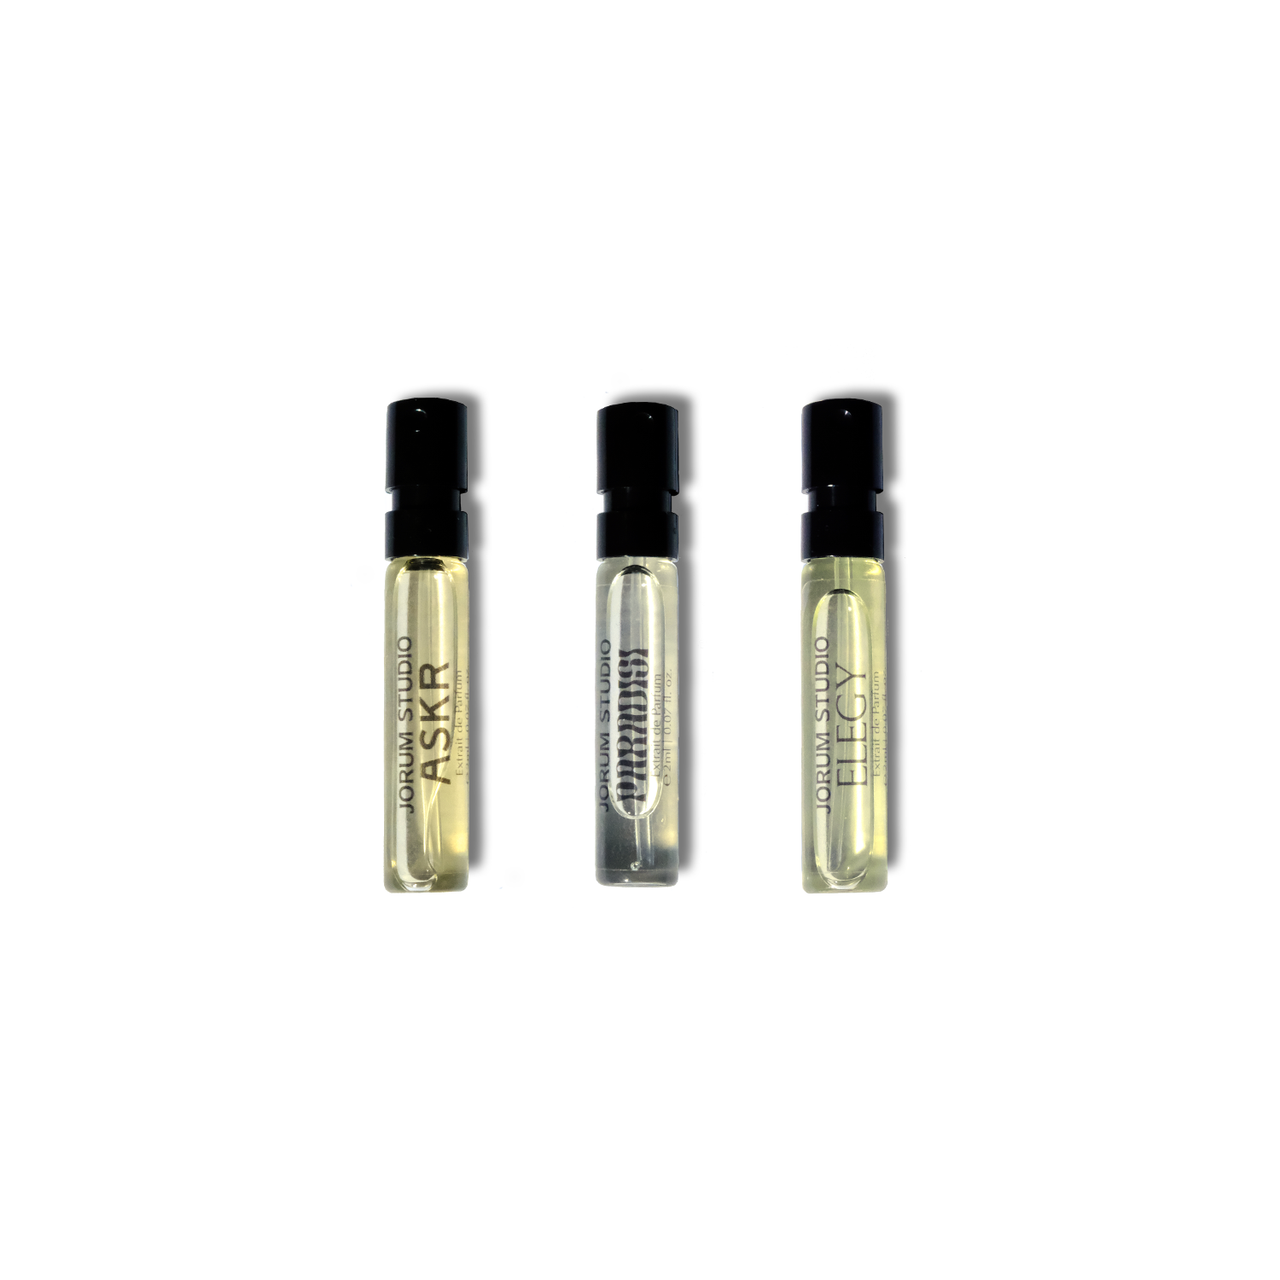 2ml sample vials of Askr, Paradisi and Elegy Extrait de Parfum by independent Scottish perfumers Jorum Studio